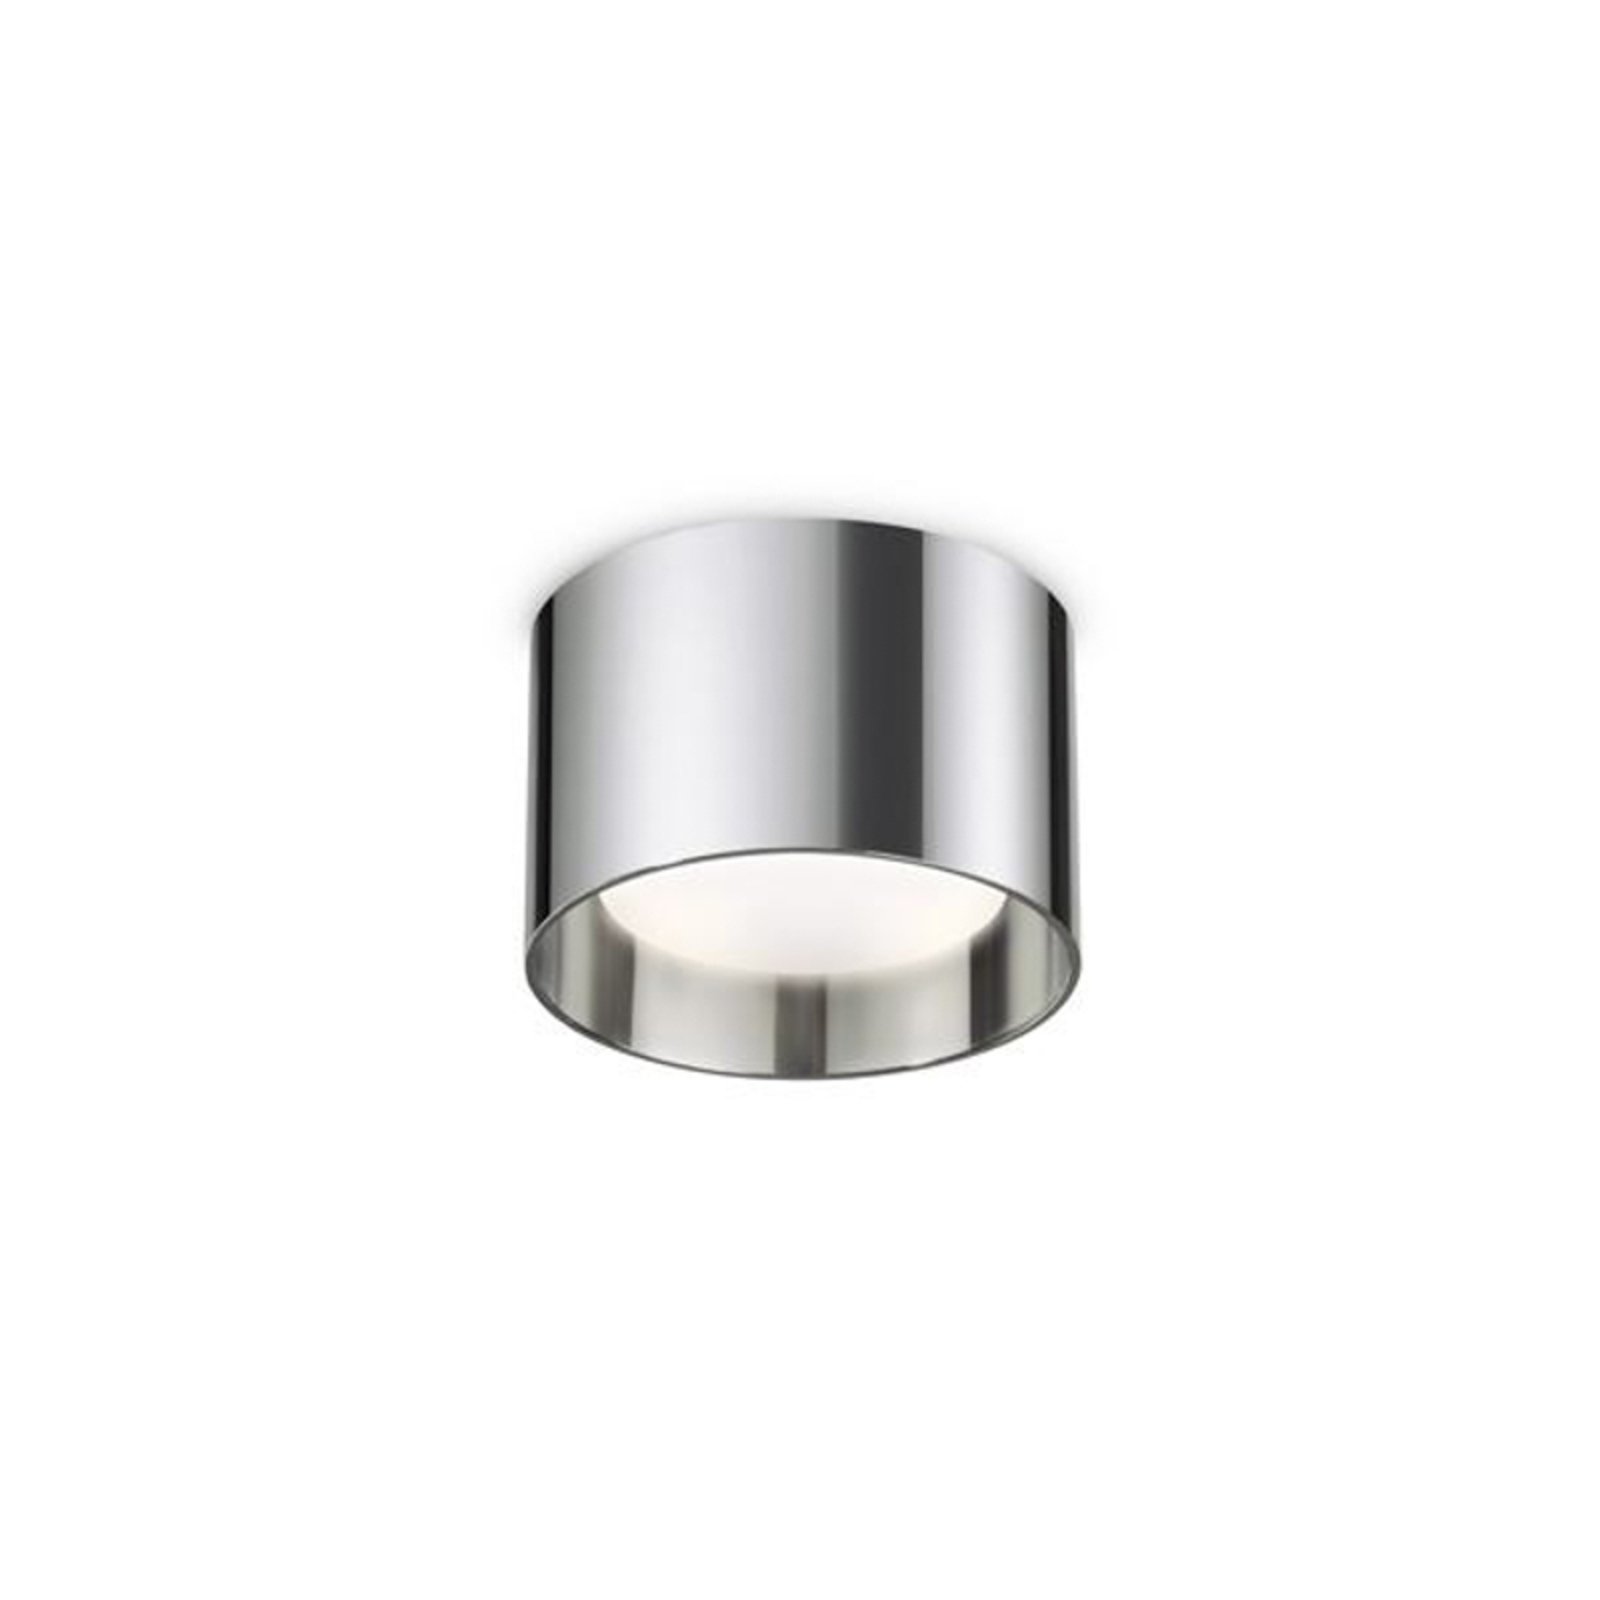 Ideal Lux downlight Spike okrągły, kolor chrom, aluminium, Ø 10 cm